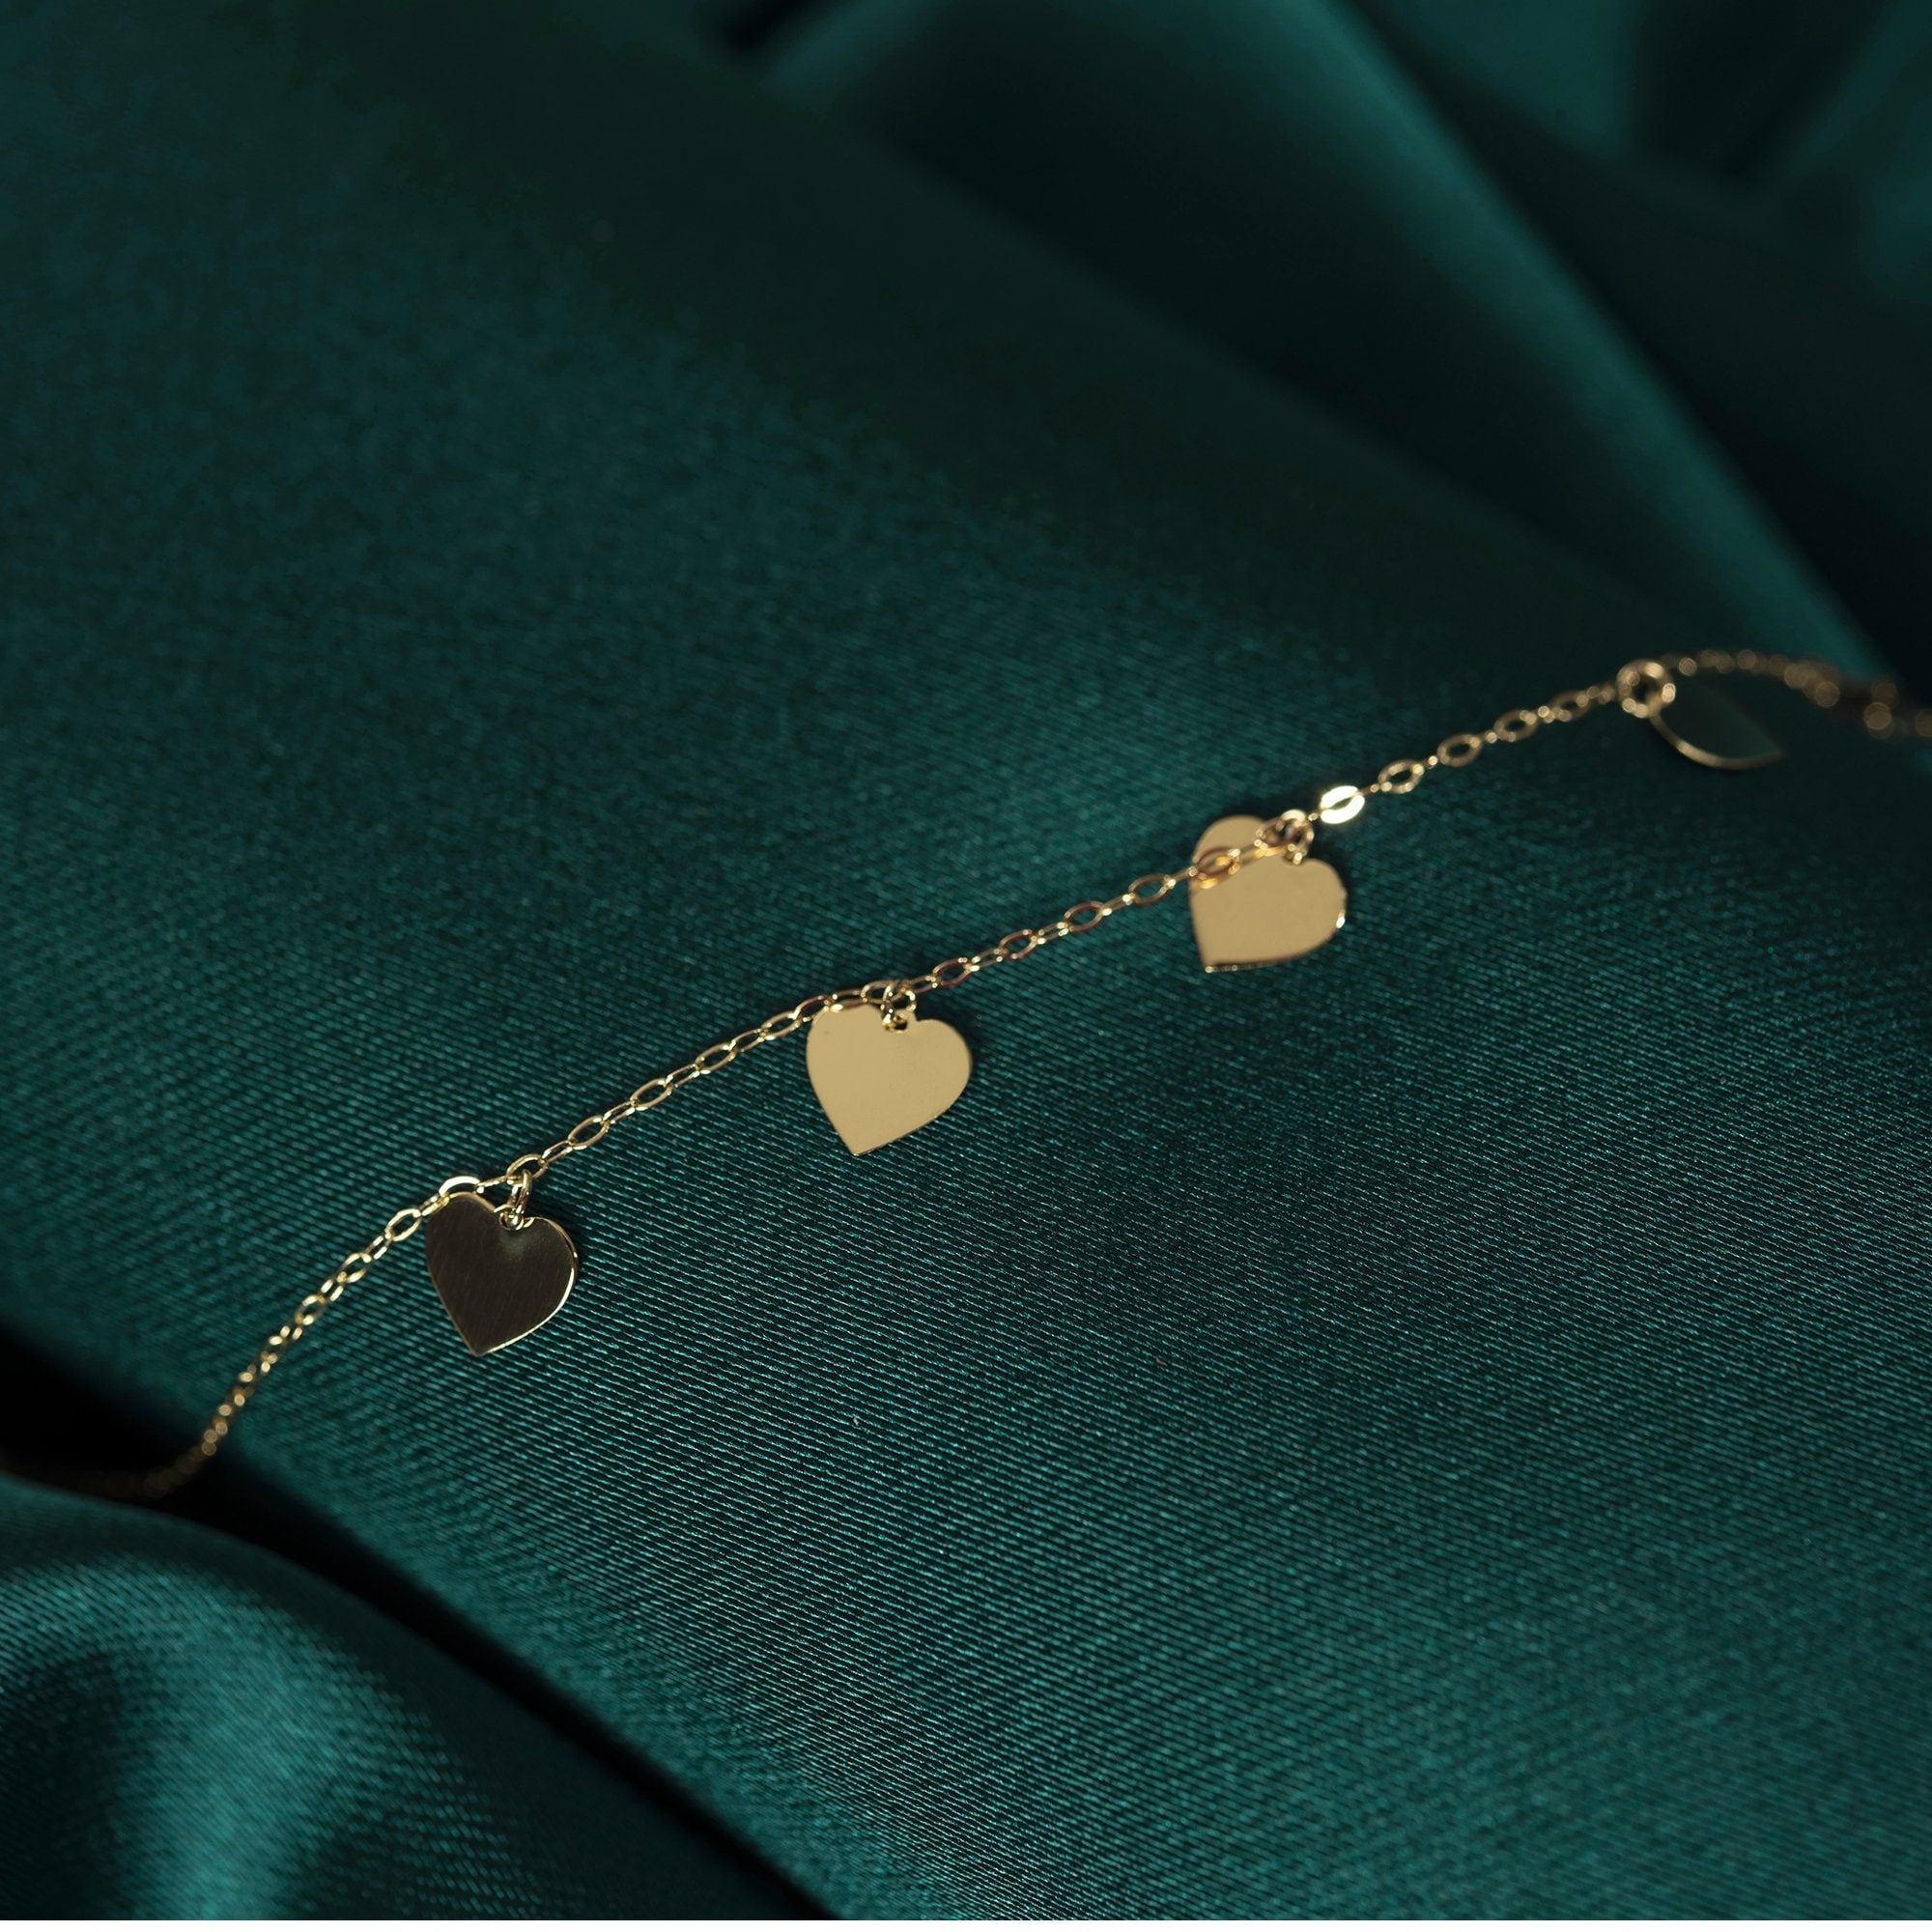 14 Carat Heart Gold Bracelet - klpcbil81